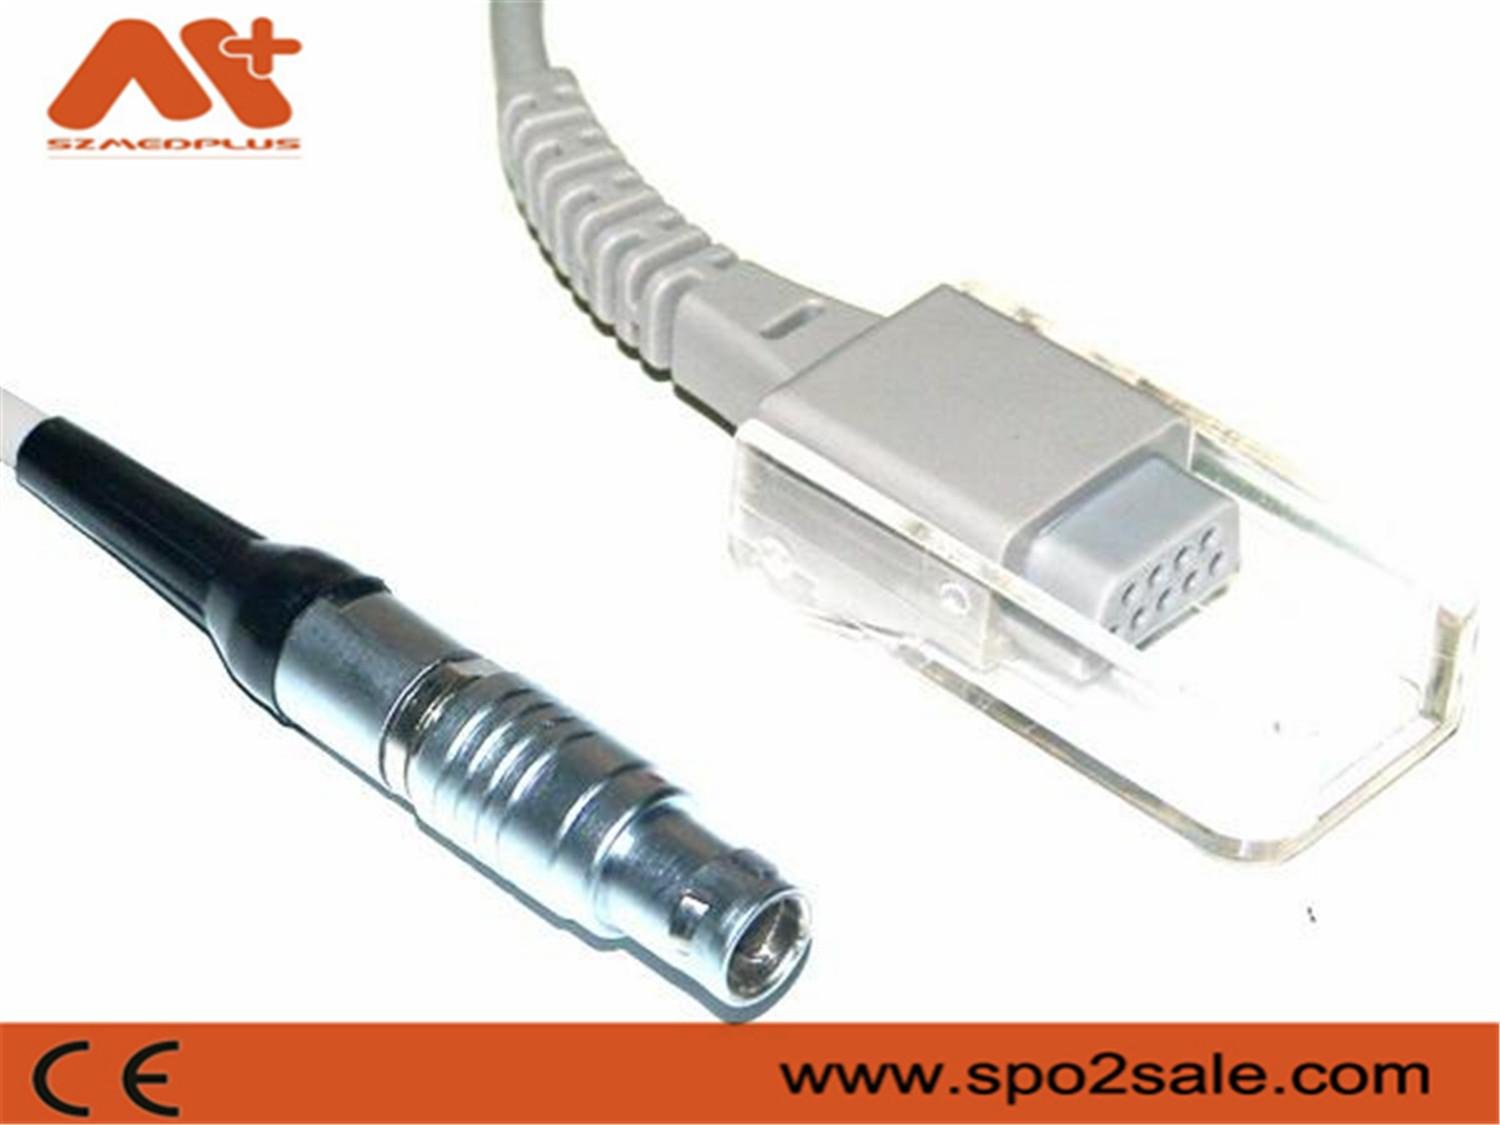 CSI 518LD Spo2 extension cable